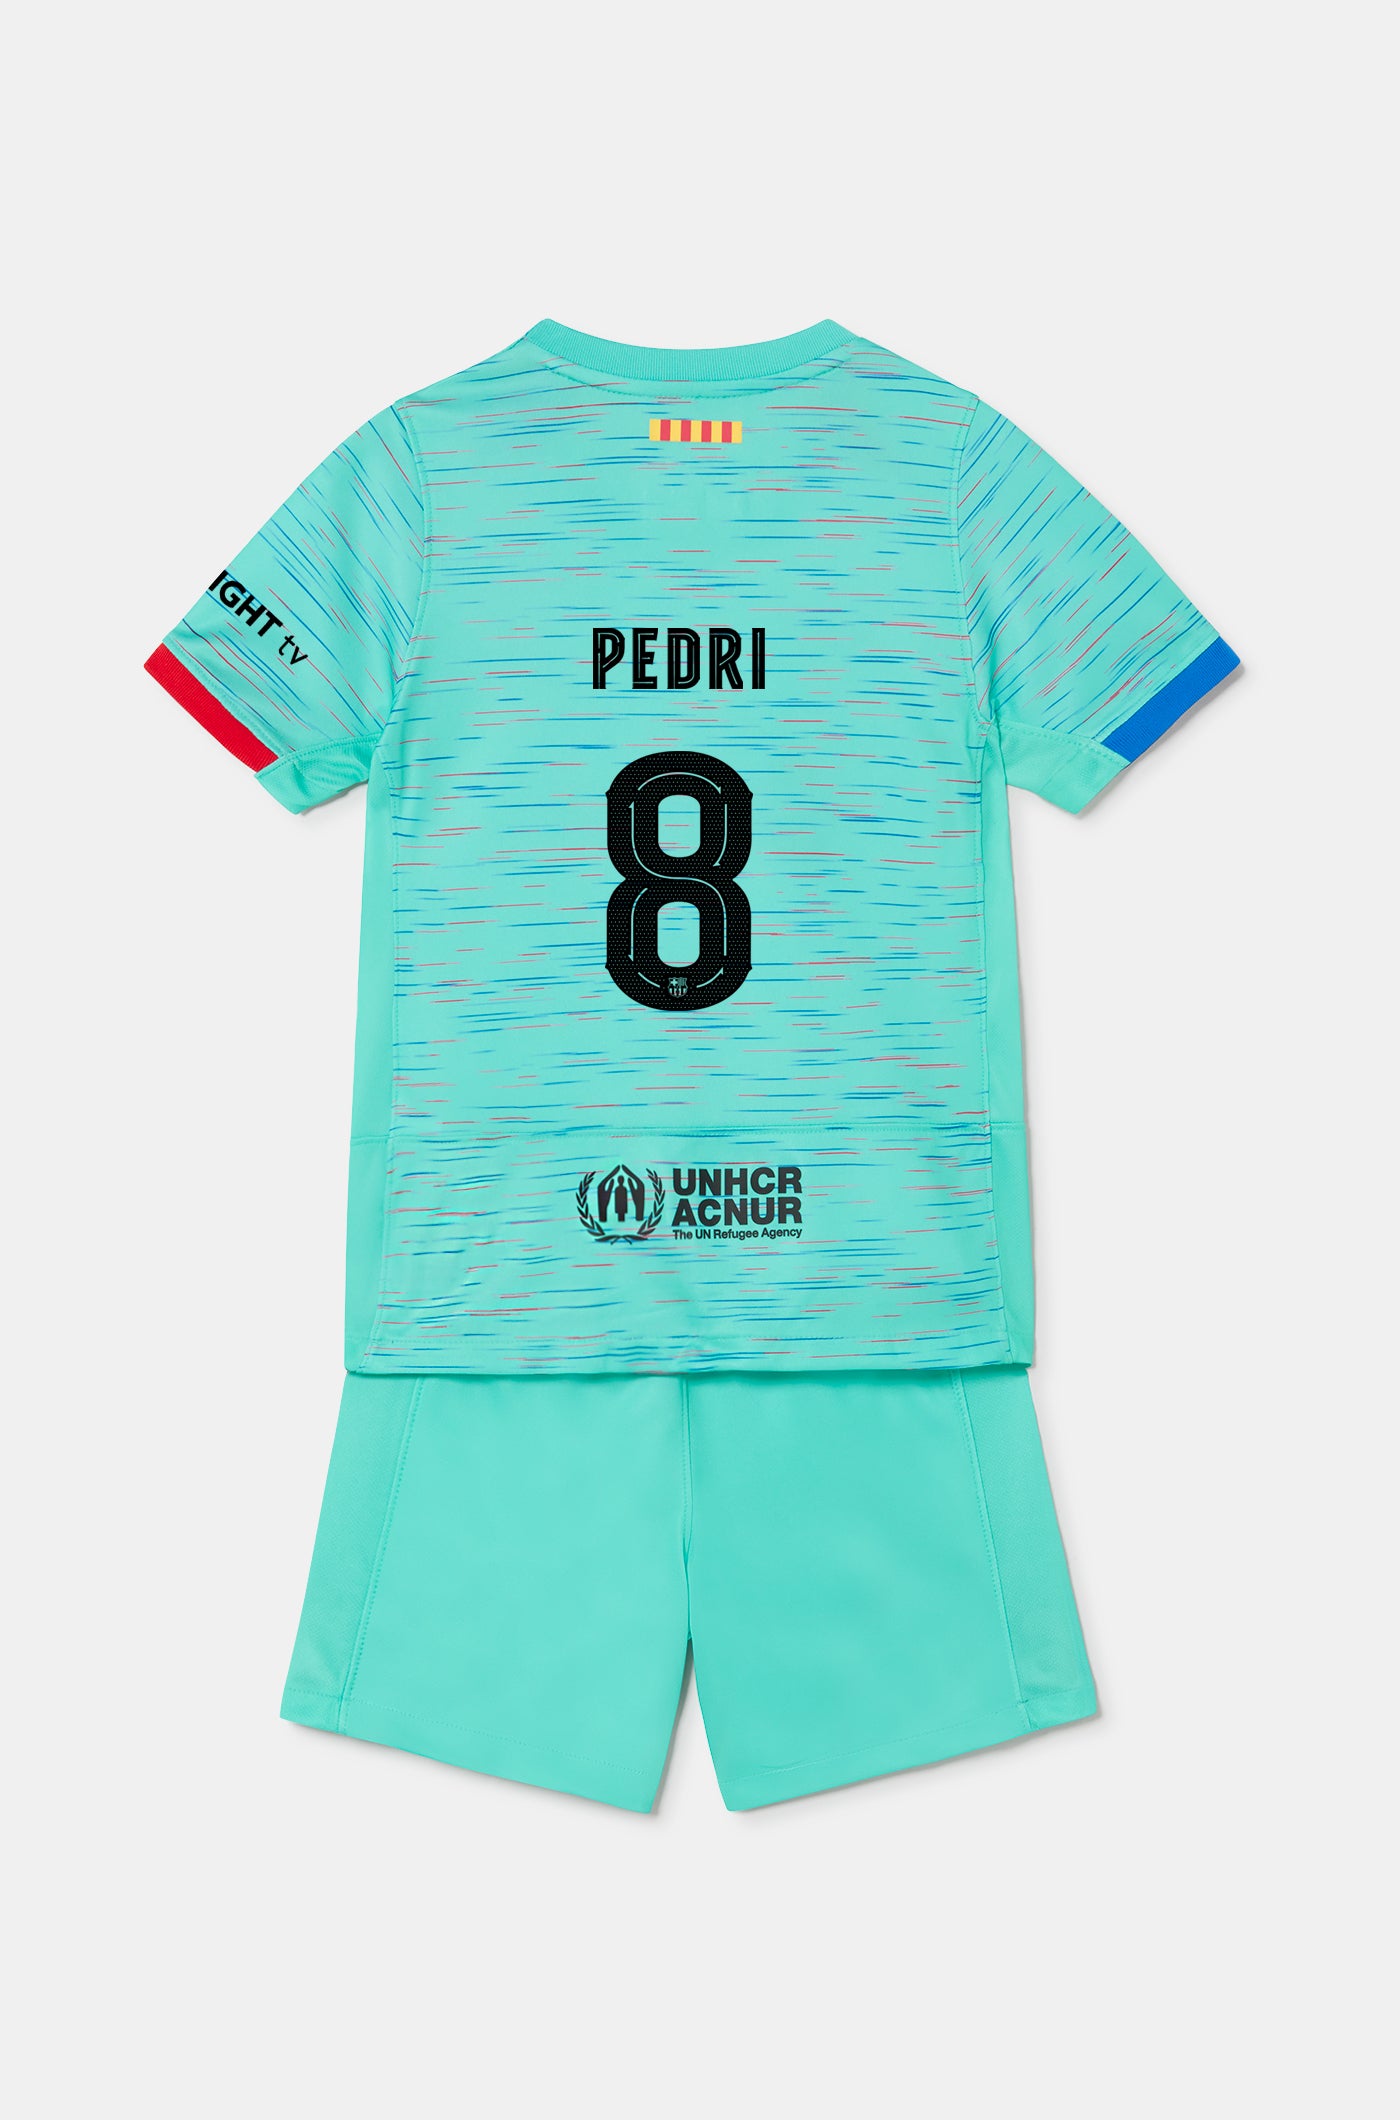 Camiseta Nike Barcelona niño Pedri 23-24 DF Stadium